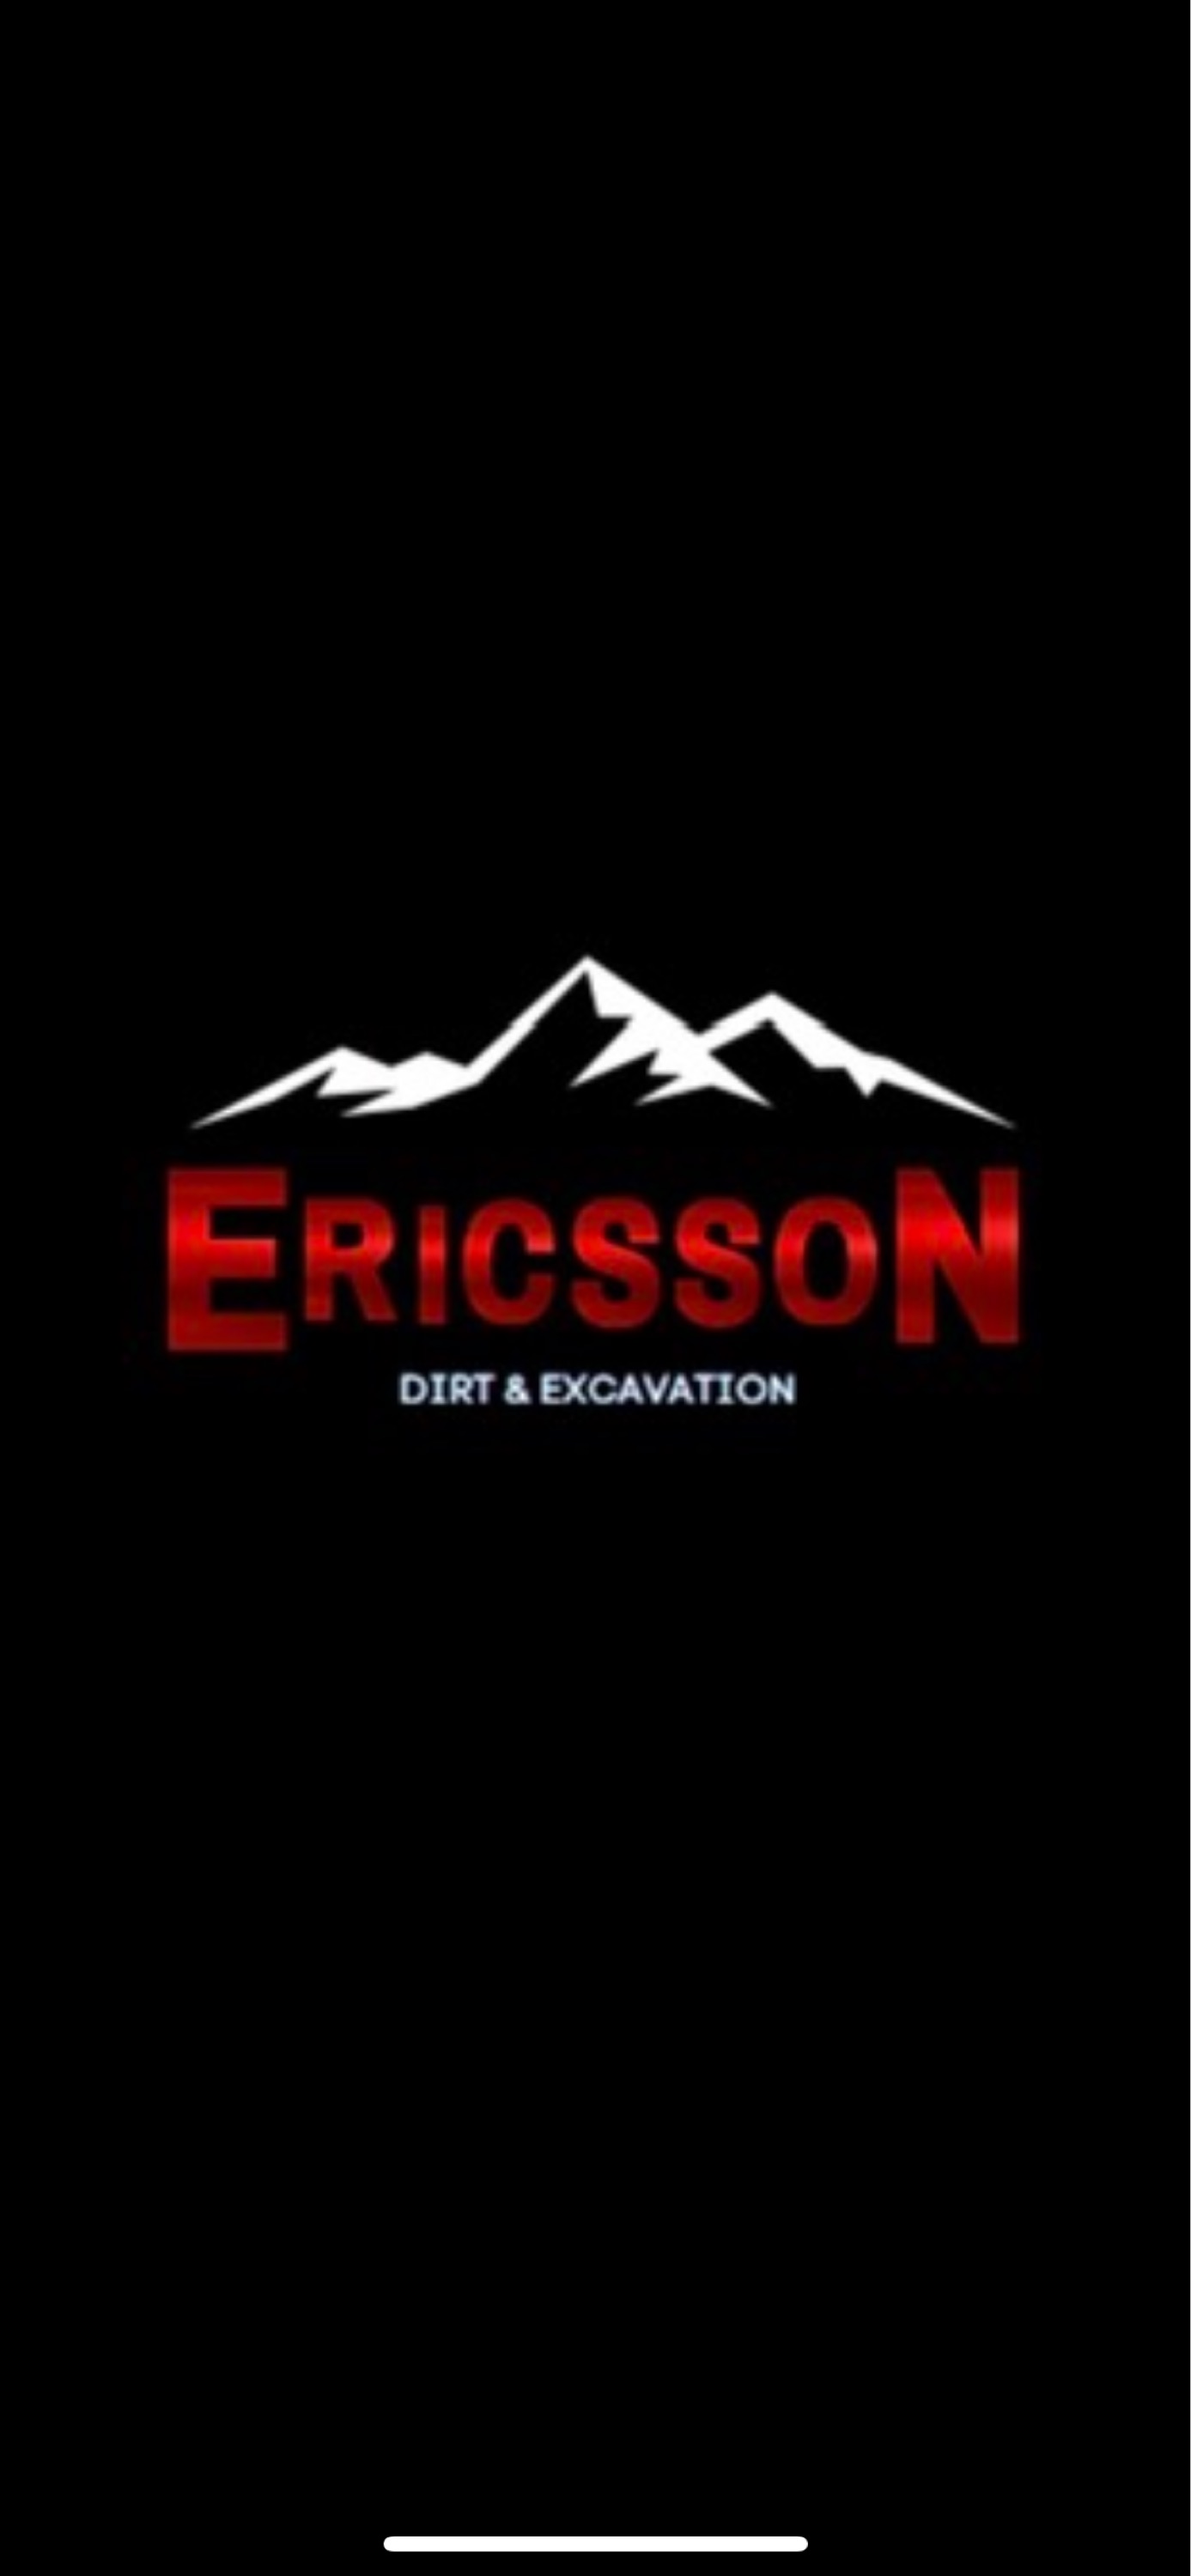 Ericsson Dirt and Excavation Logo